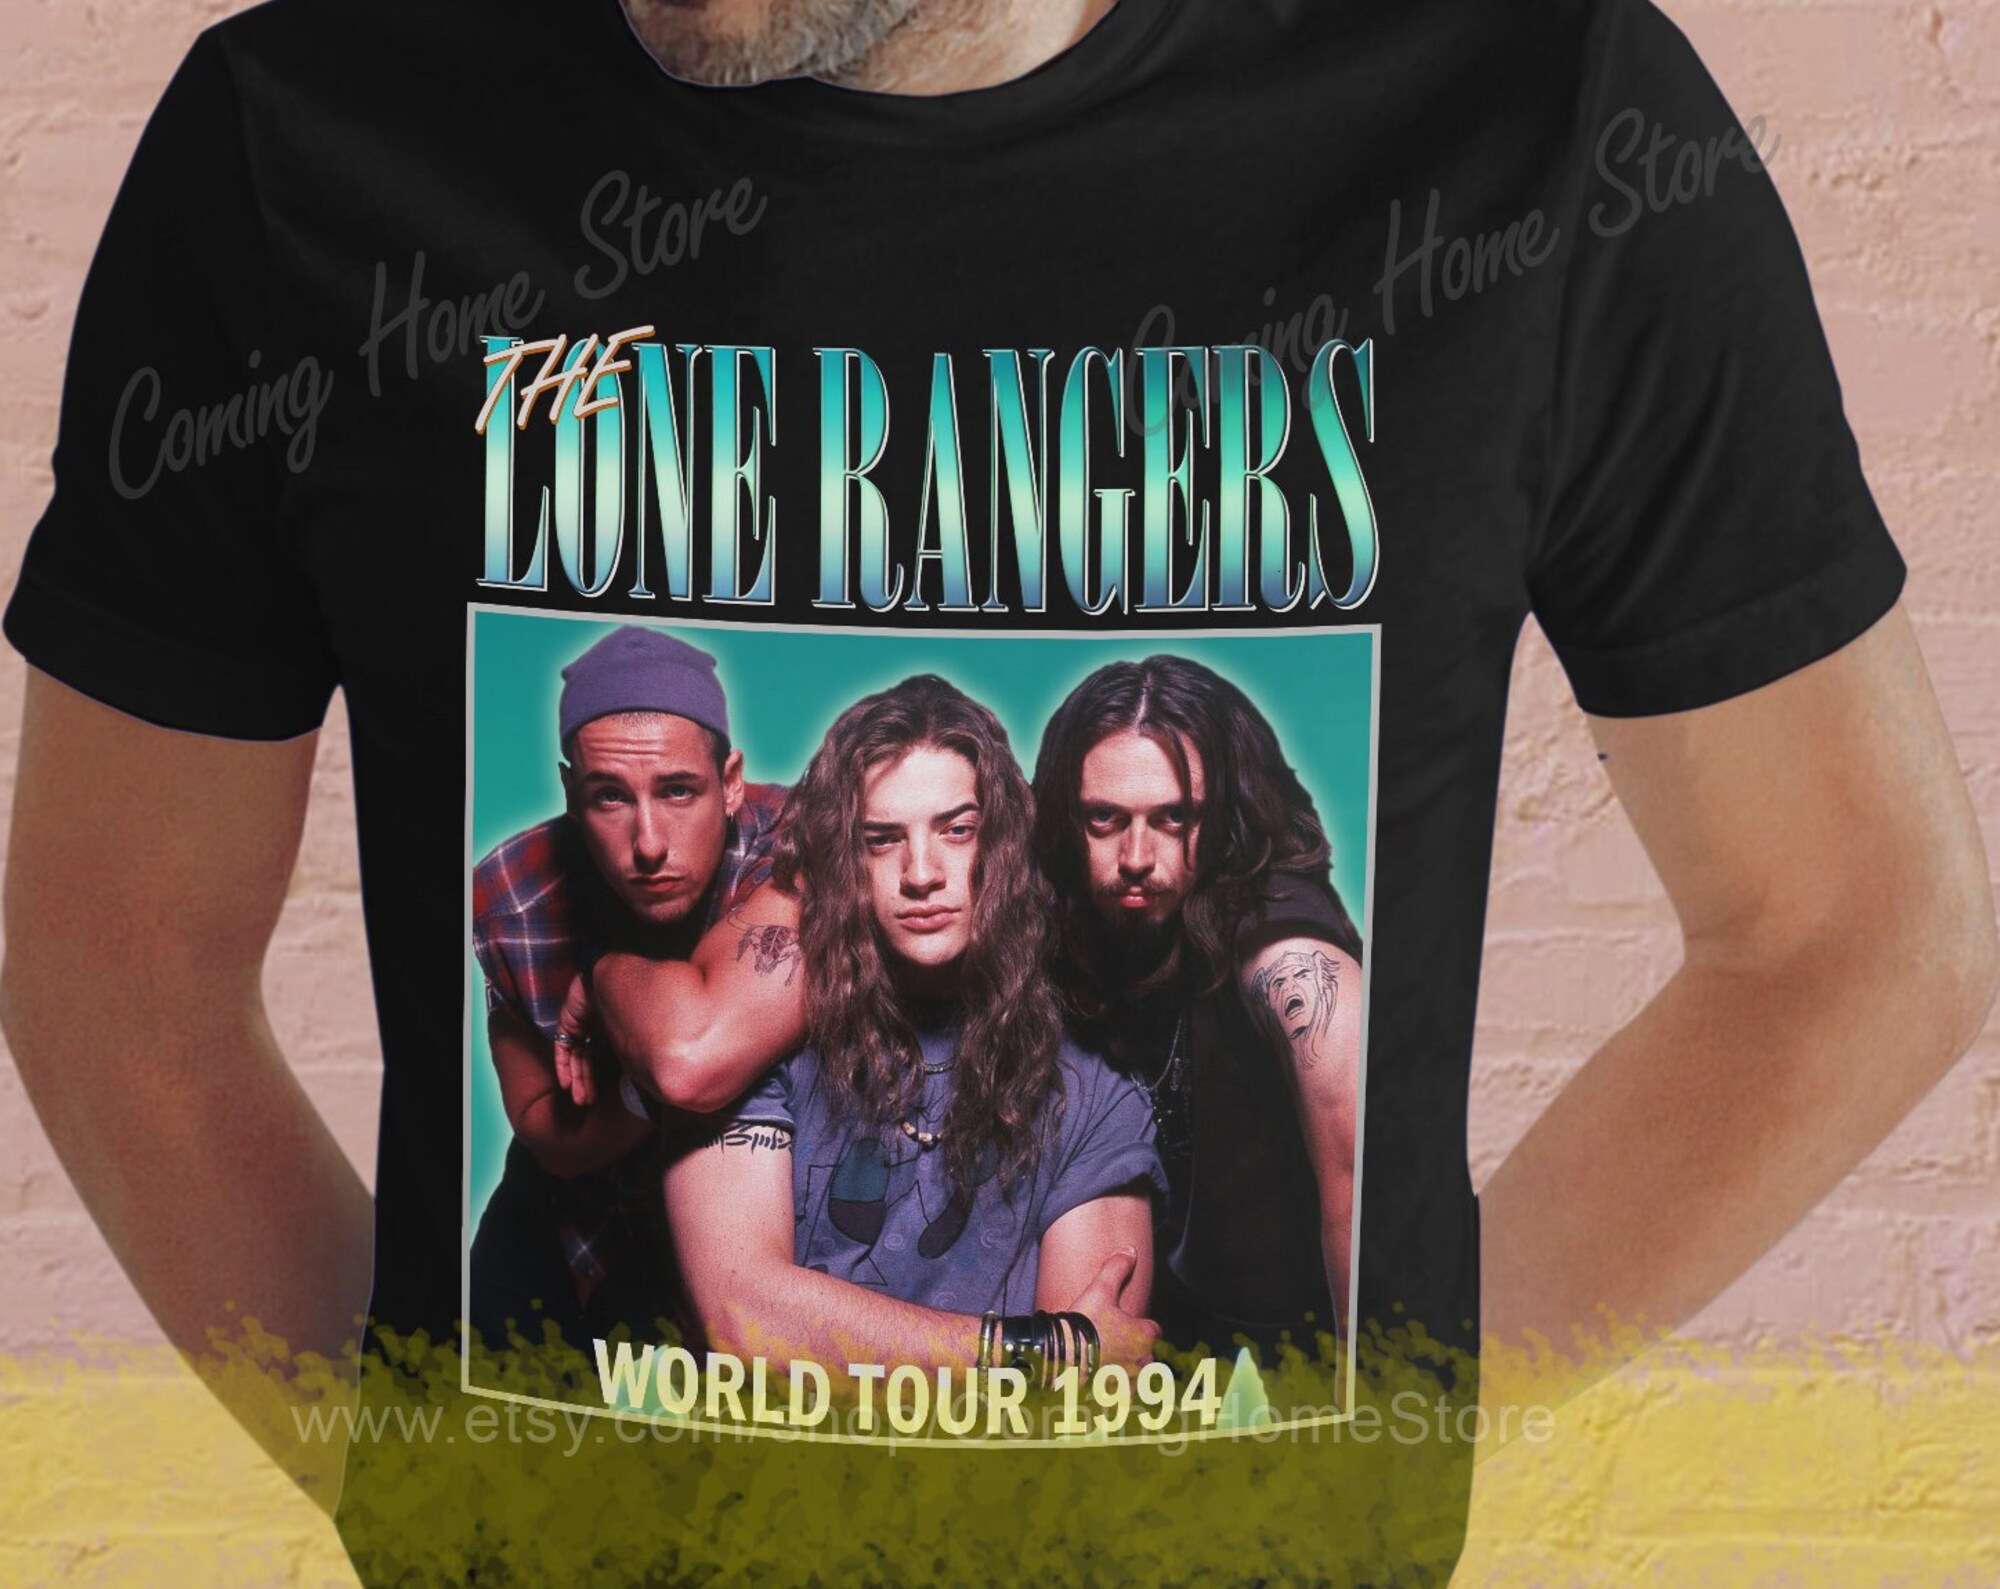 The Lone Rangers World Tour '94 Shirt T-shirt